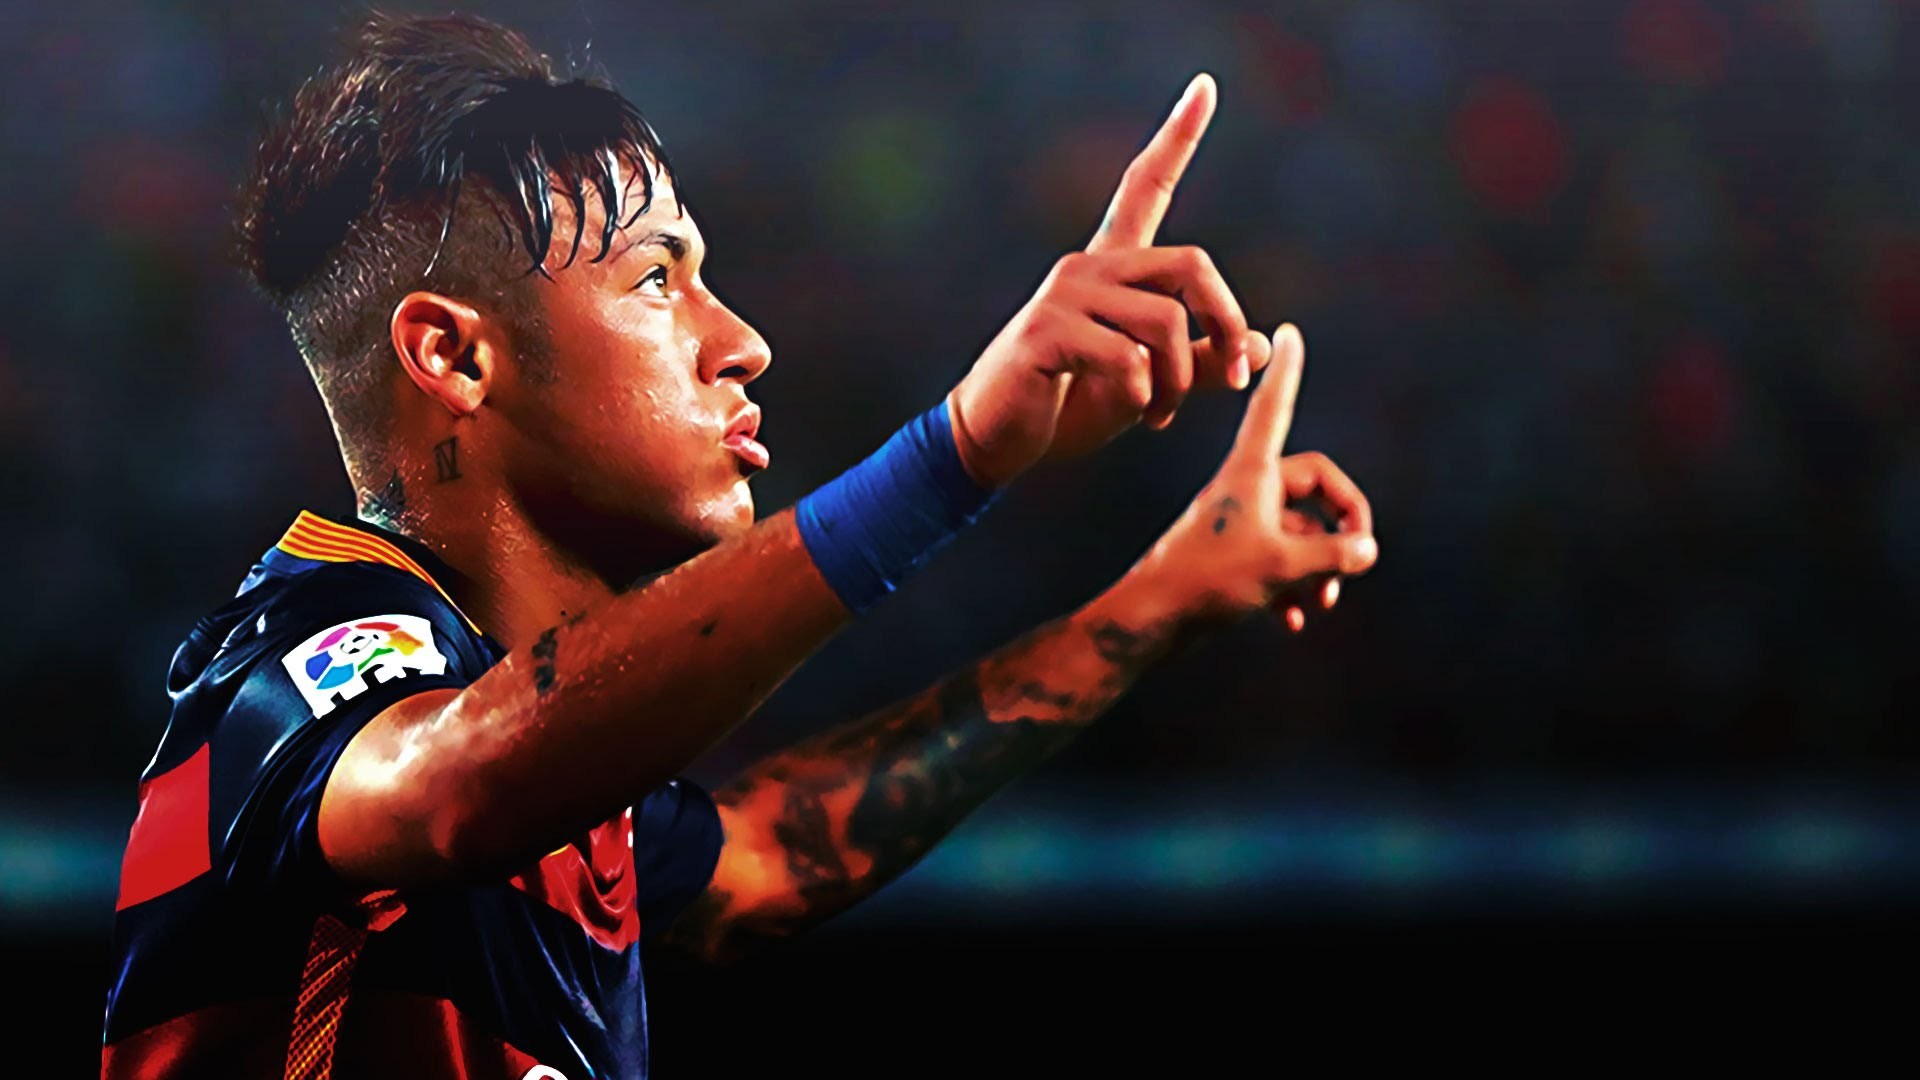 Amazing Neymar Football Player Hd Free Raise Hands Mobile Bakground Desktop Photos